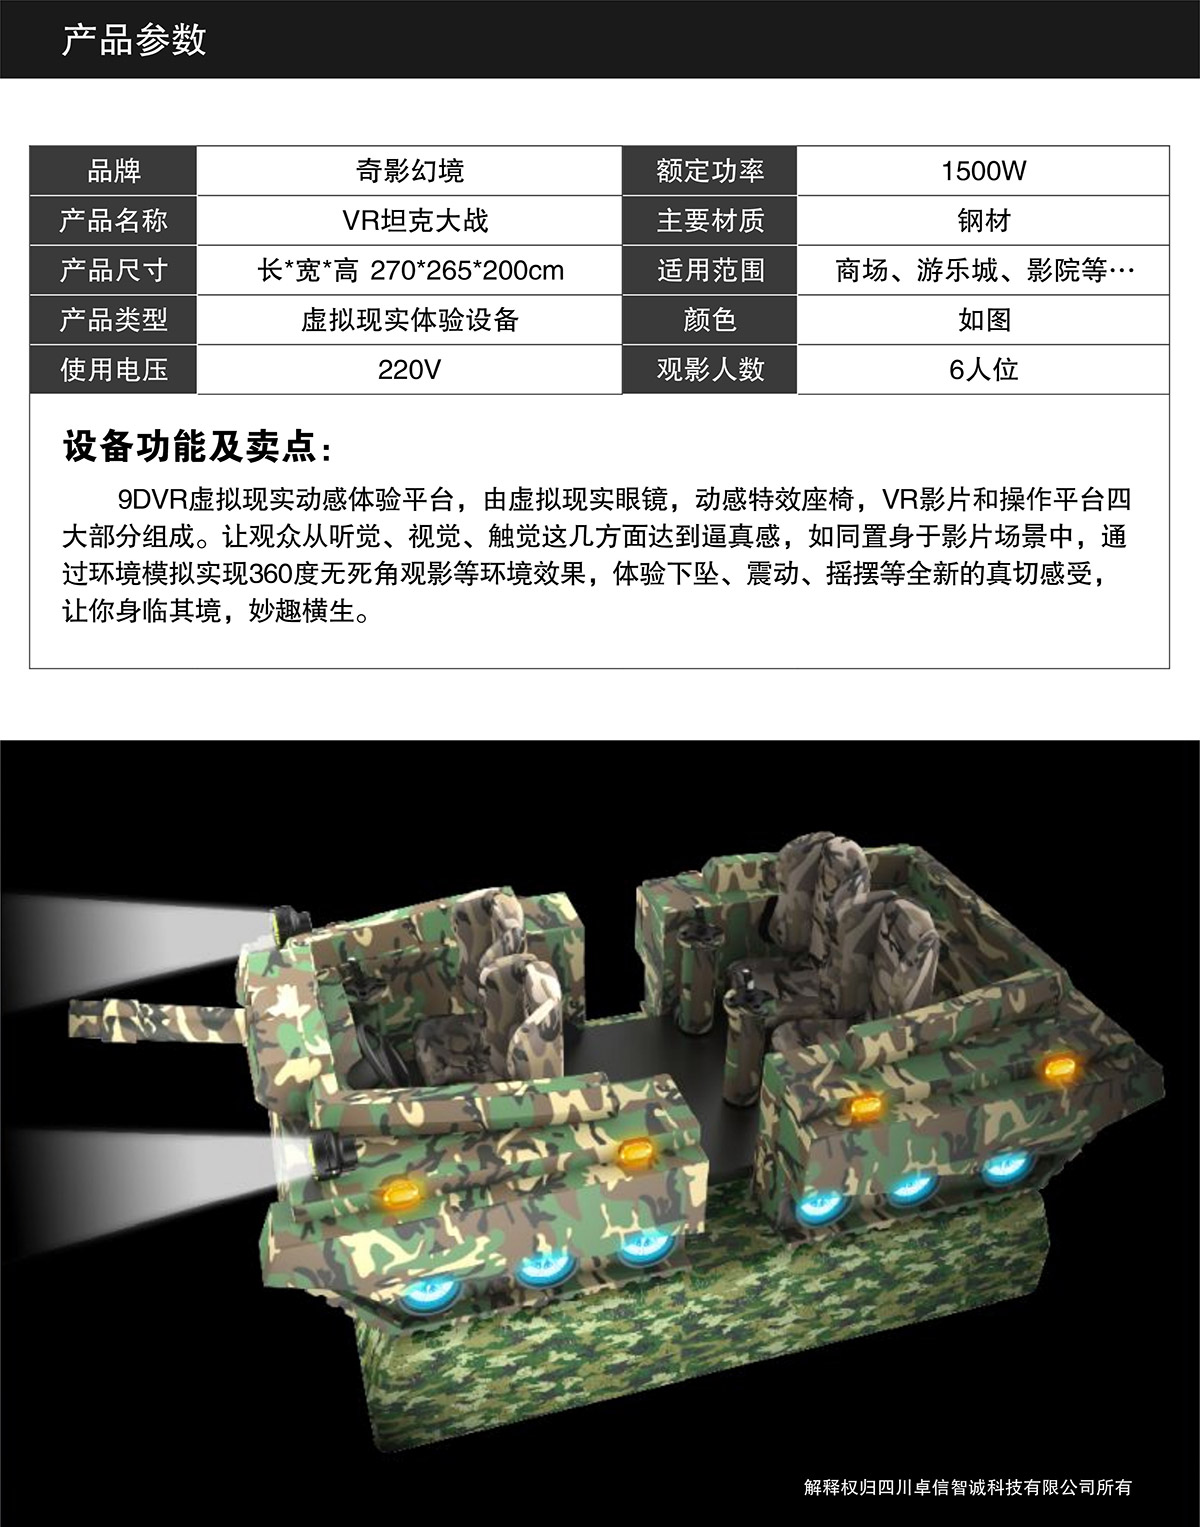 VR台风坦克大战产品参数.jpg